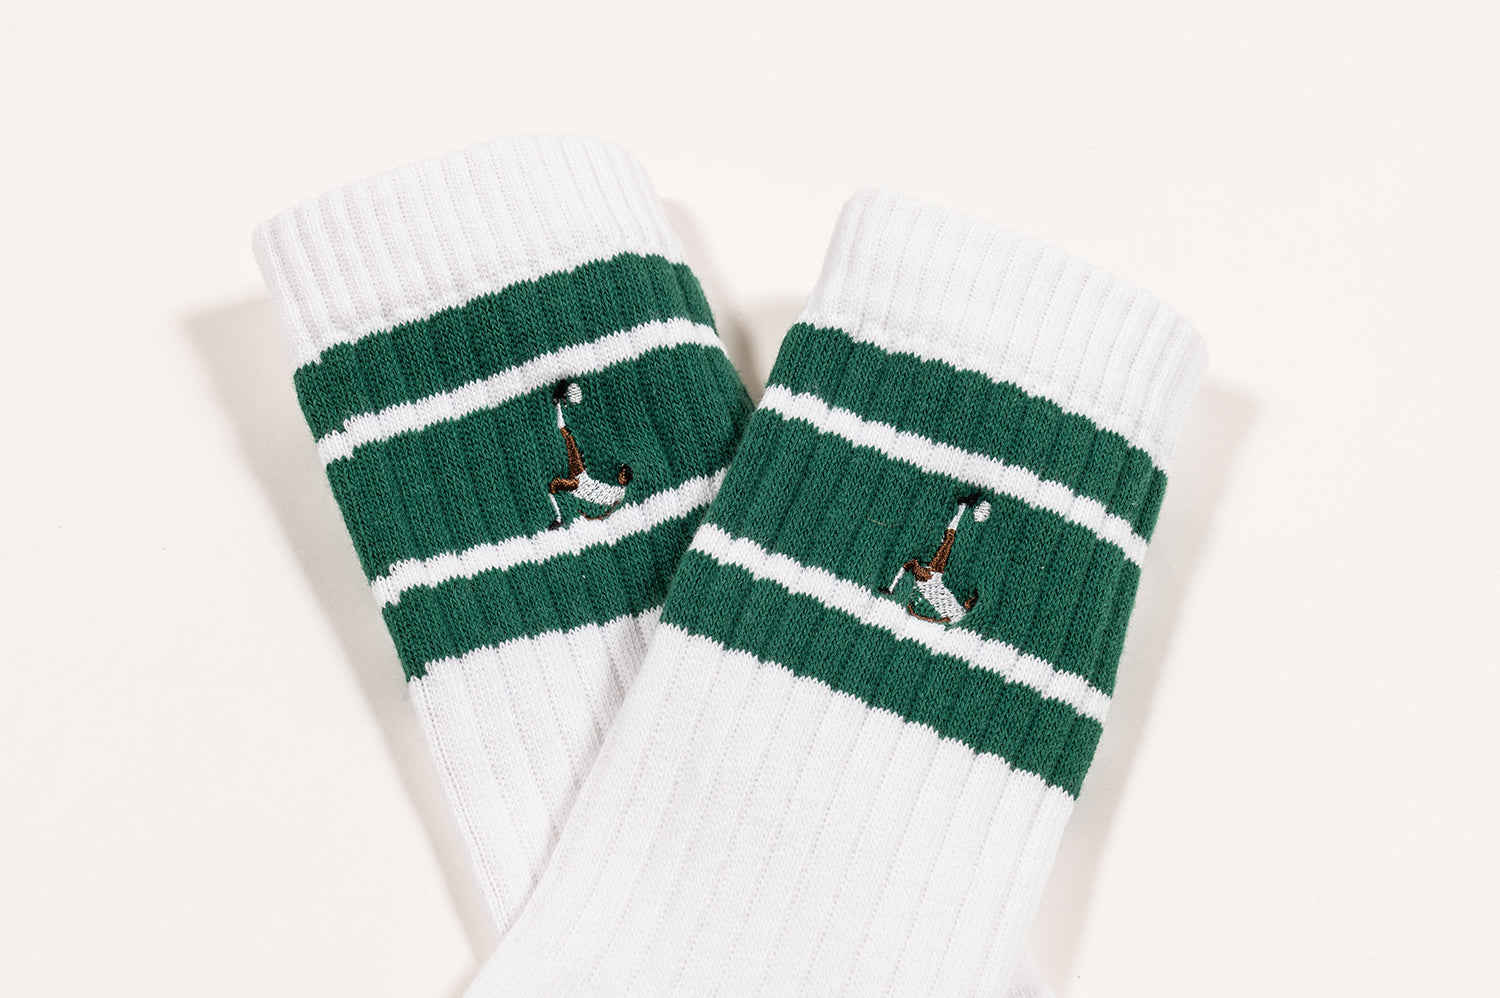 VSS Studio x New York Cosmos Pelé Embroidered Socks - White/Green